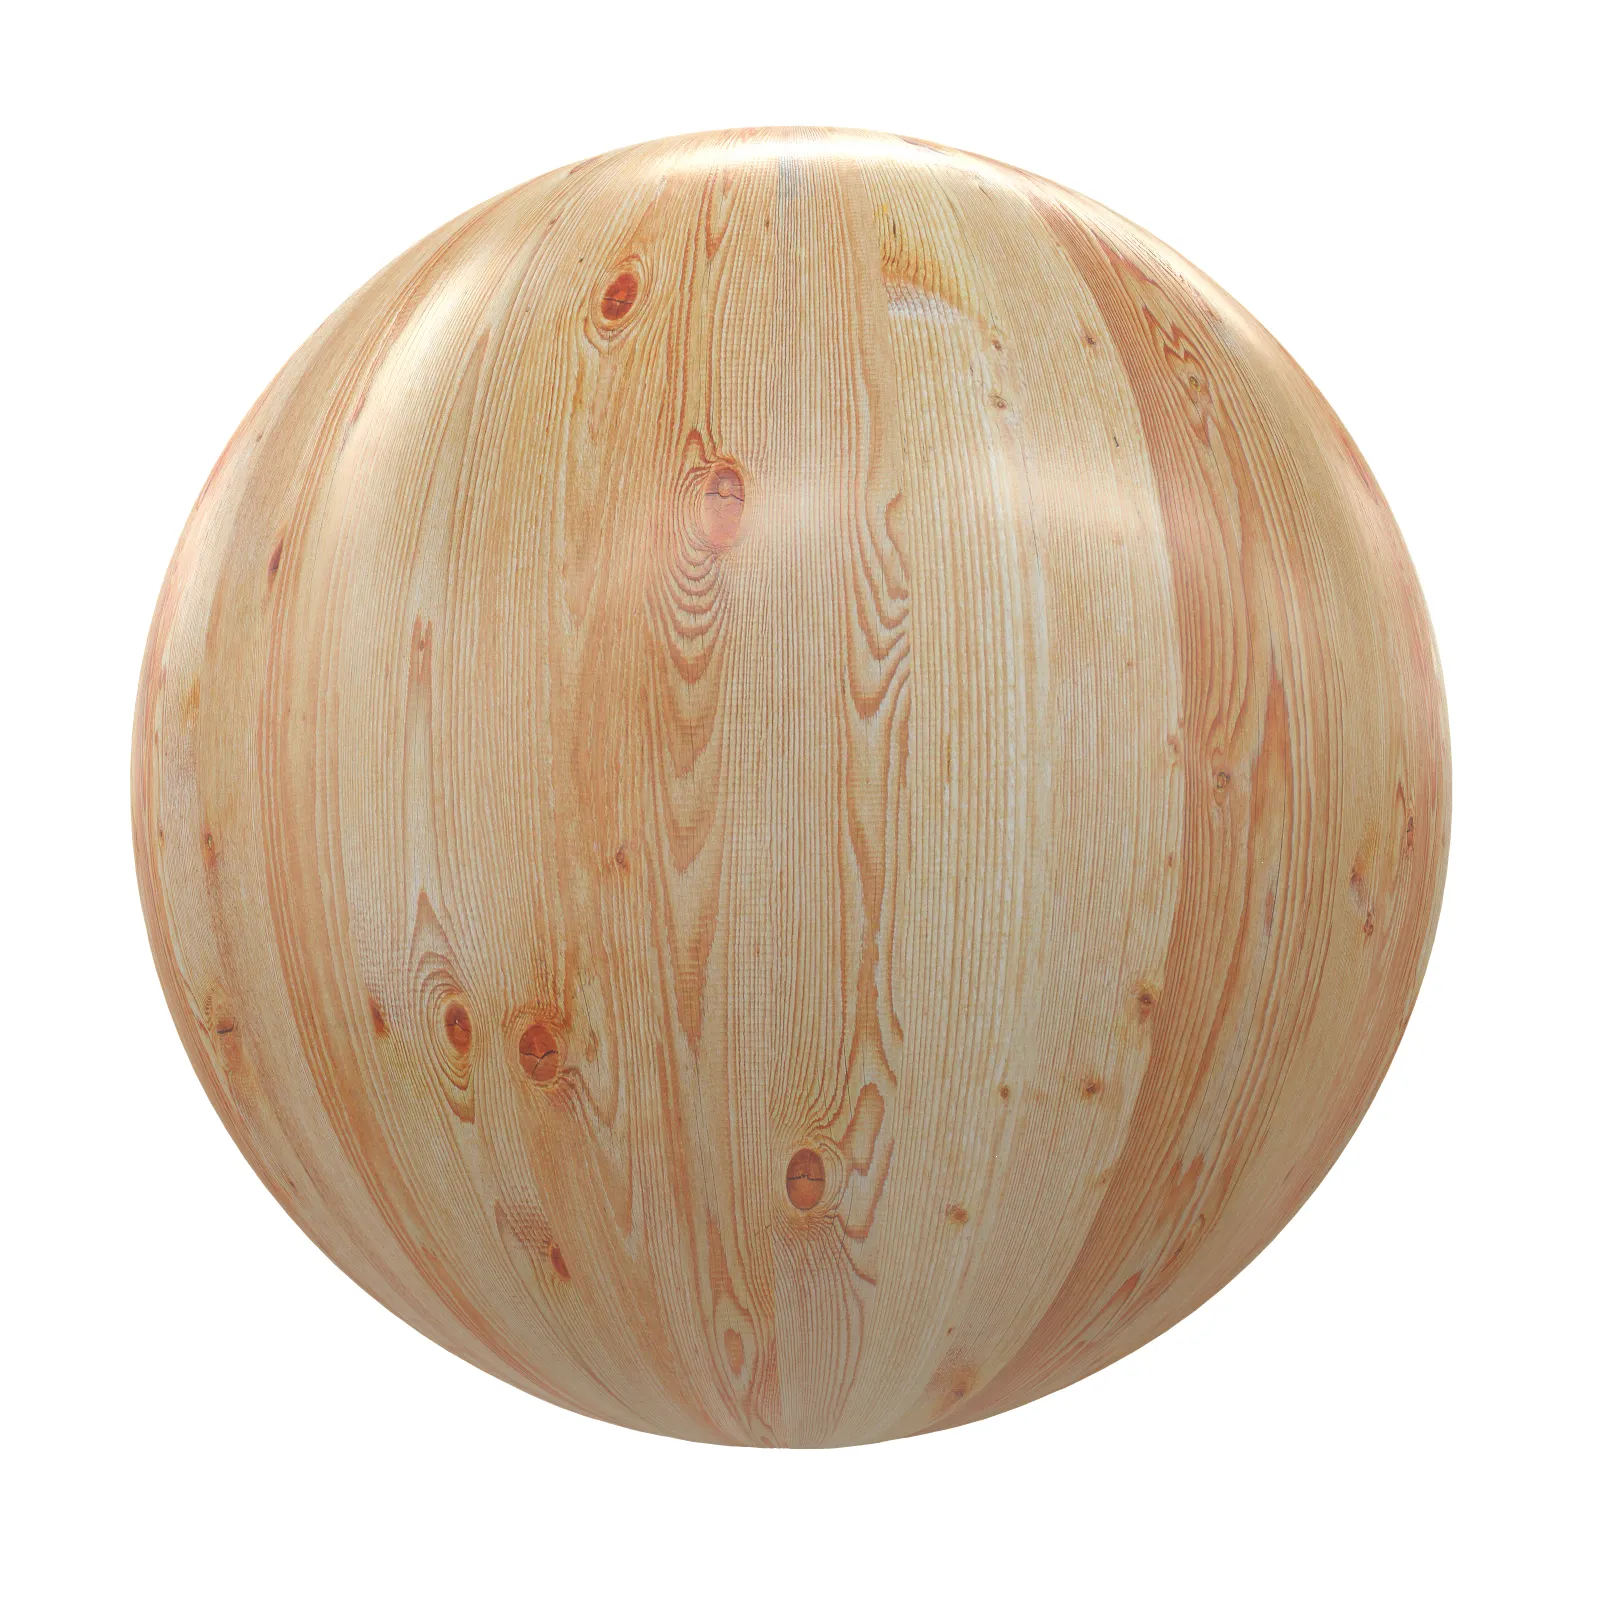 3ds Max Files – Texture – 8 – Wood Texture – 99 – Wood Texture by Minh Nguyen